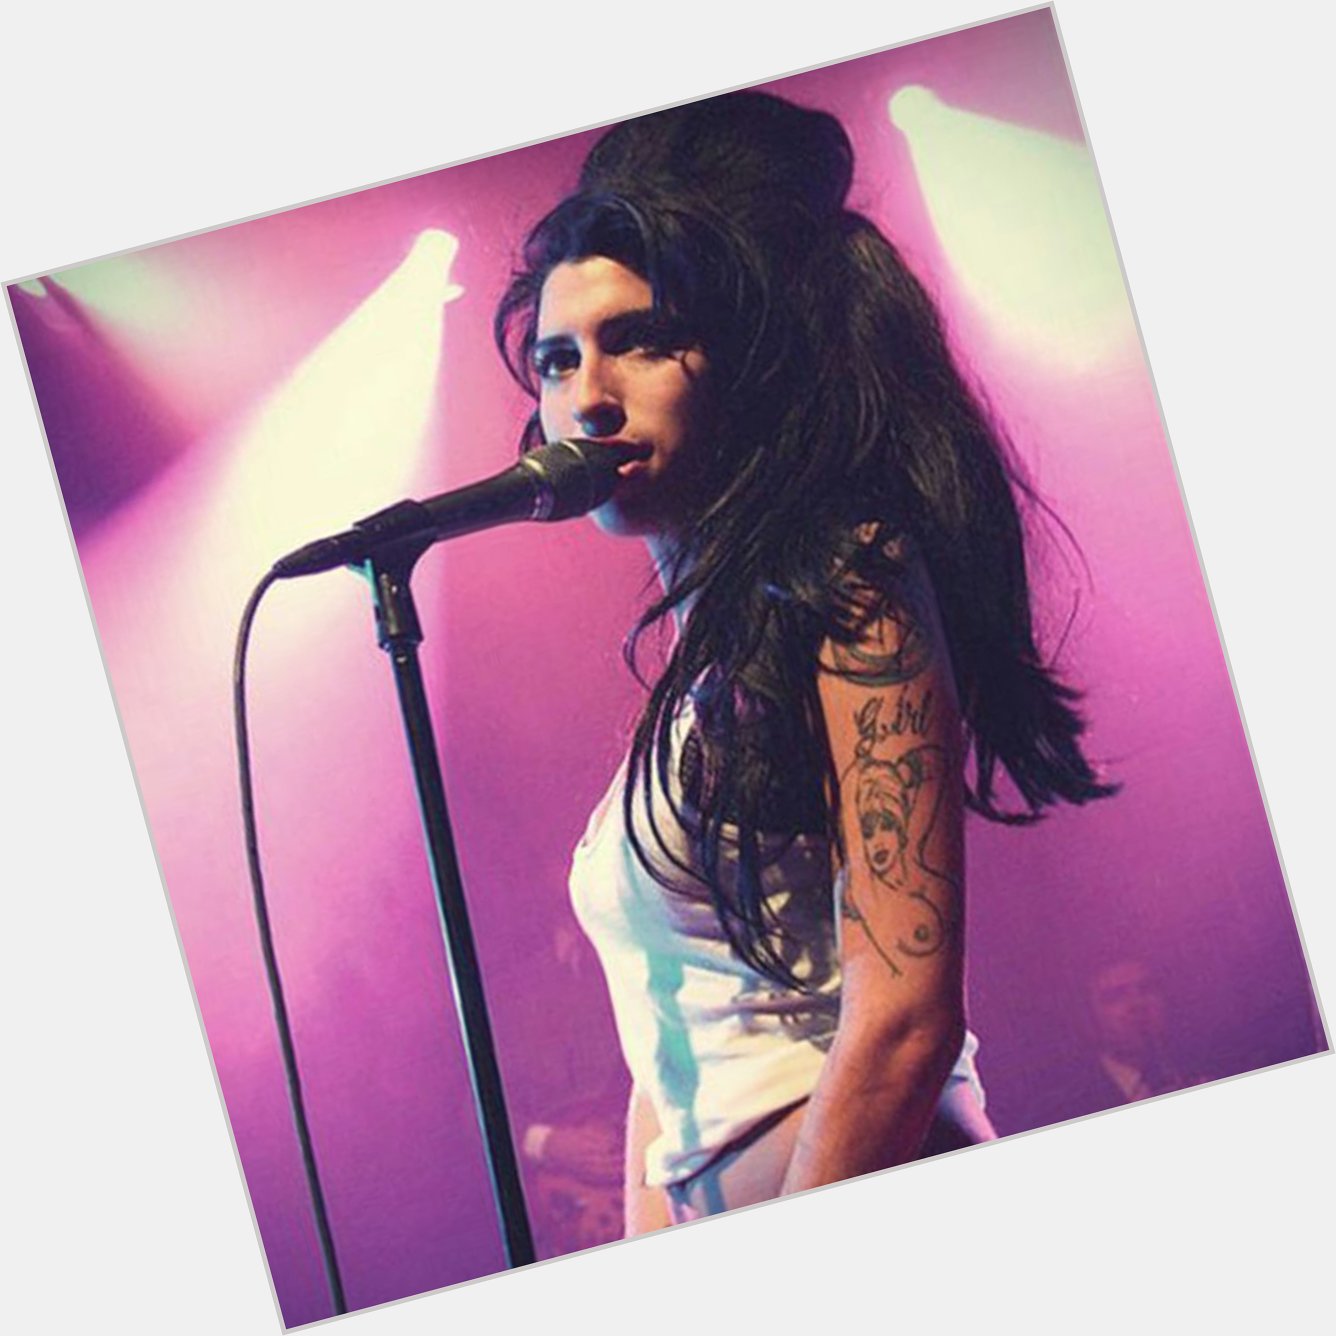 Happy Birthday to Amy Winehouse, a truly legendary artist 